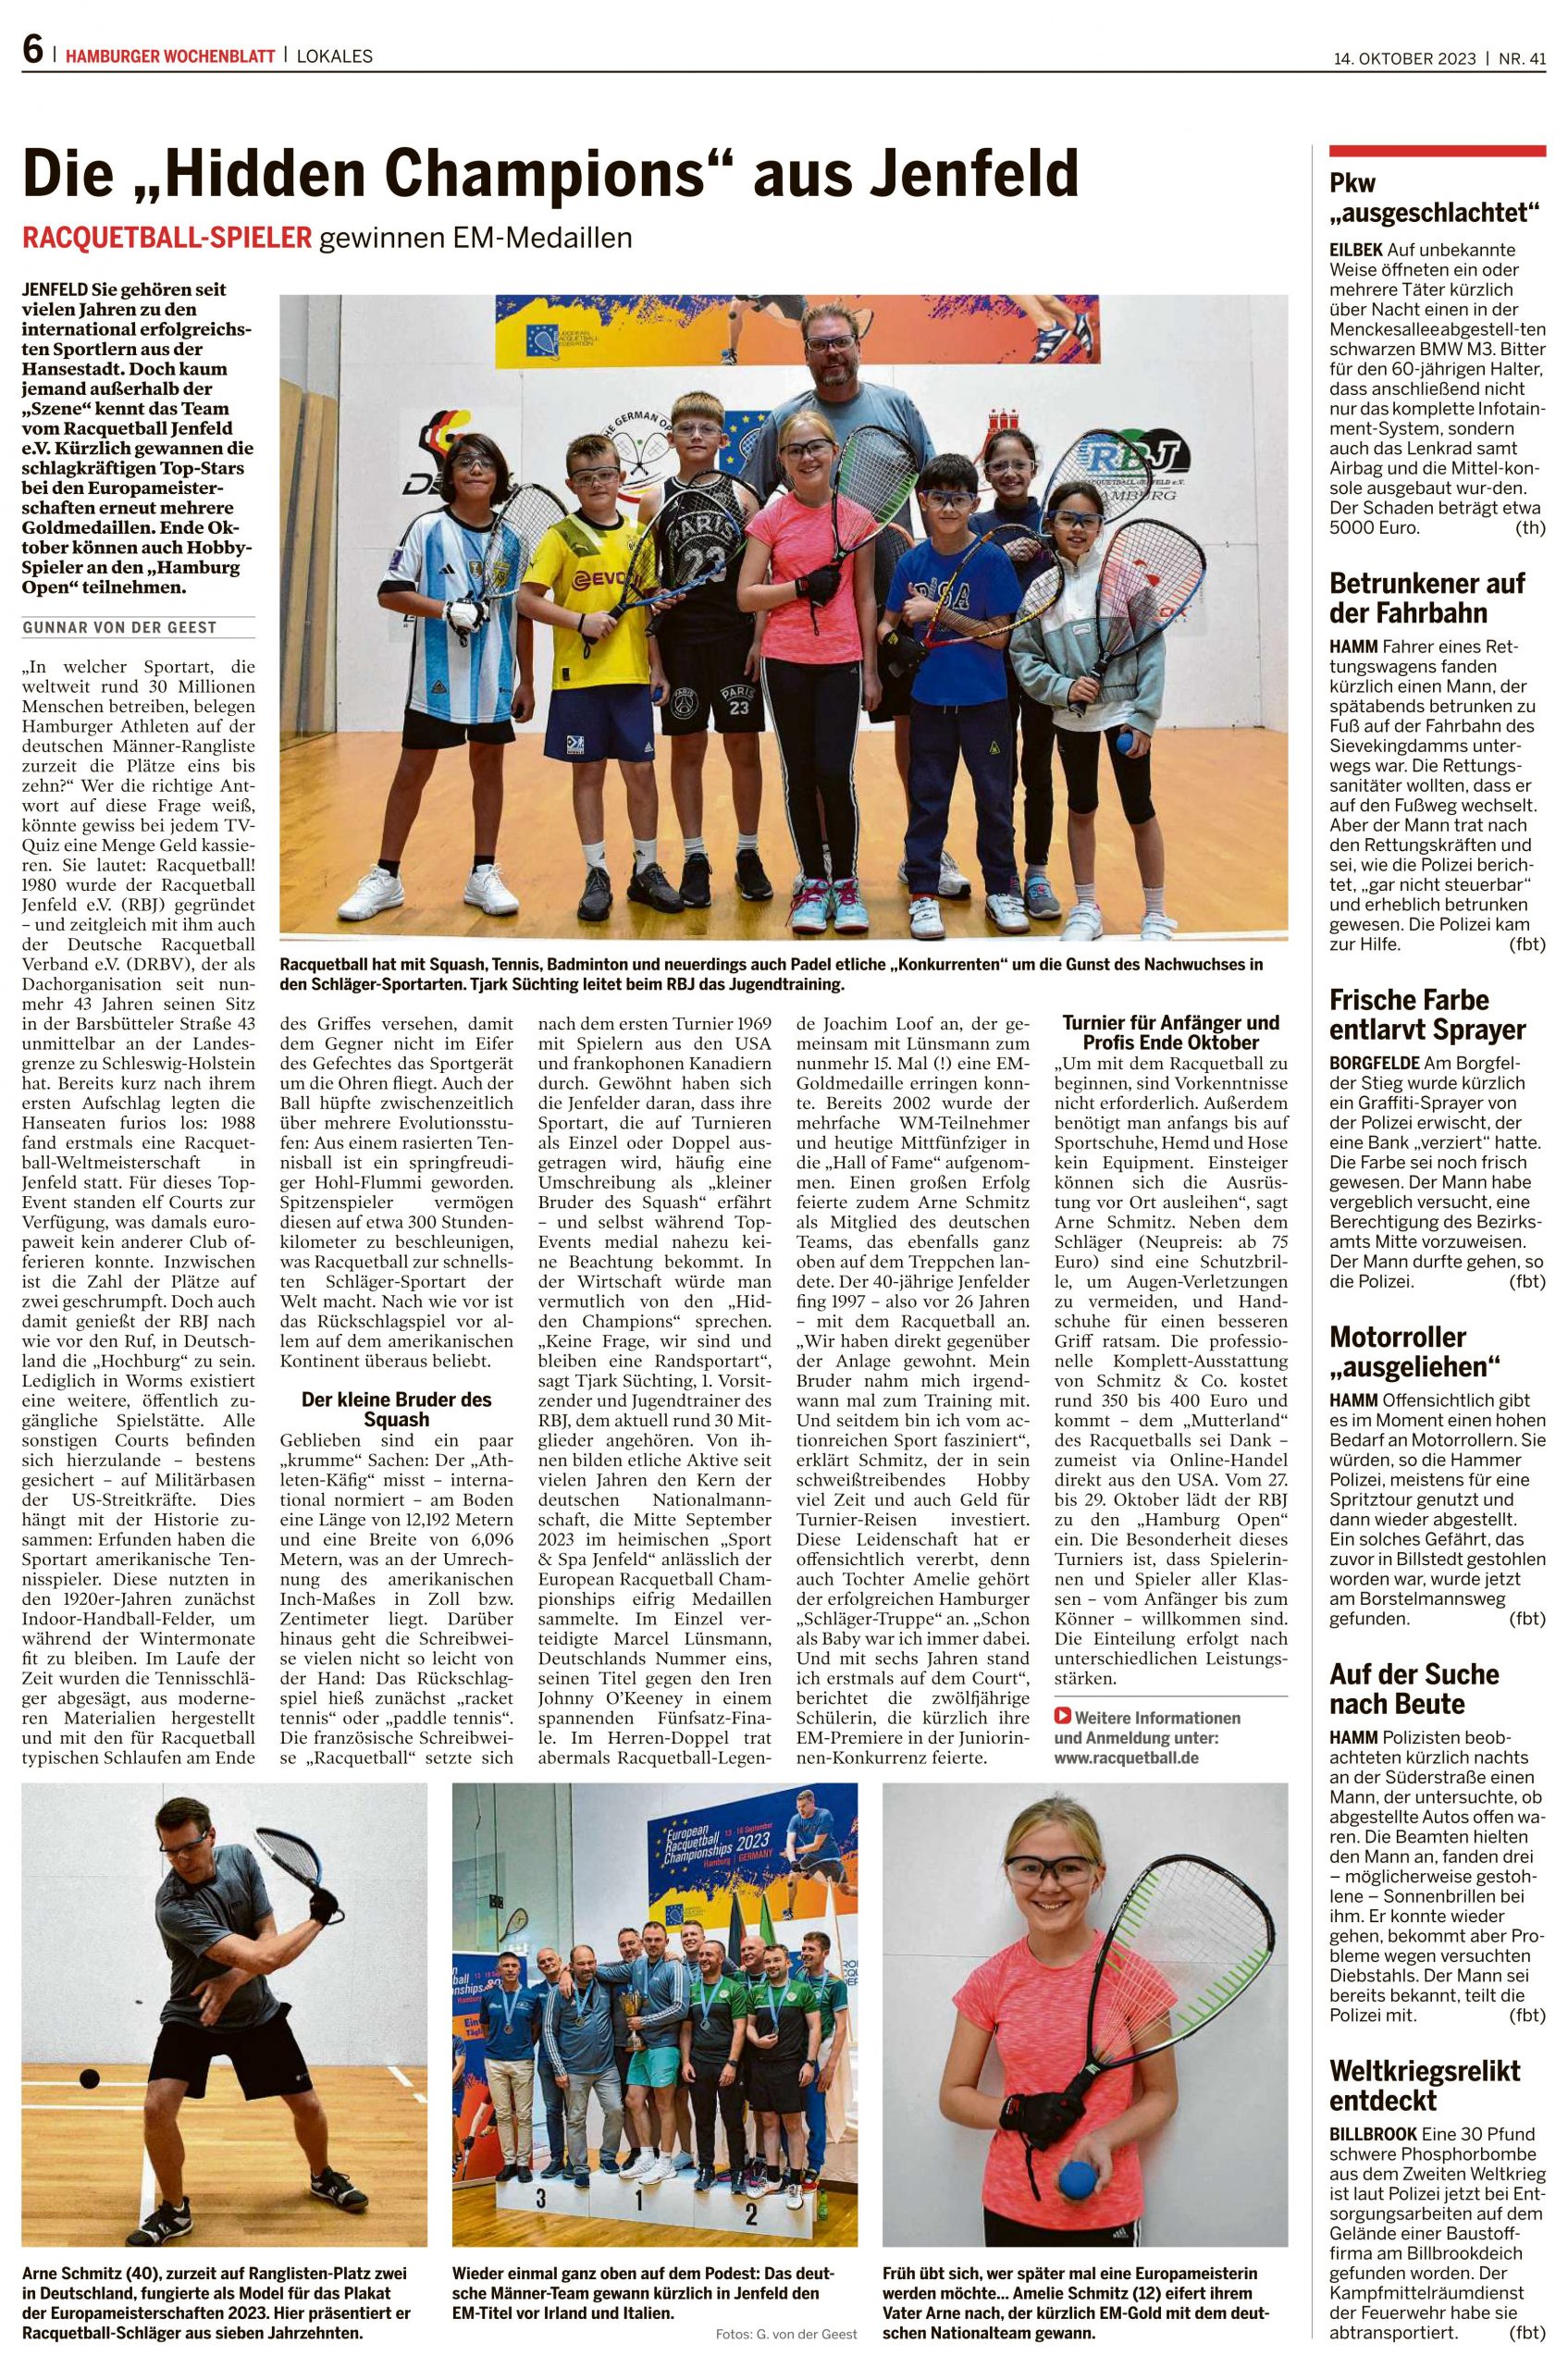 Read more about the article Racquetball im Hamburger Wochenblatt